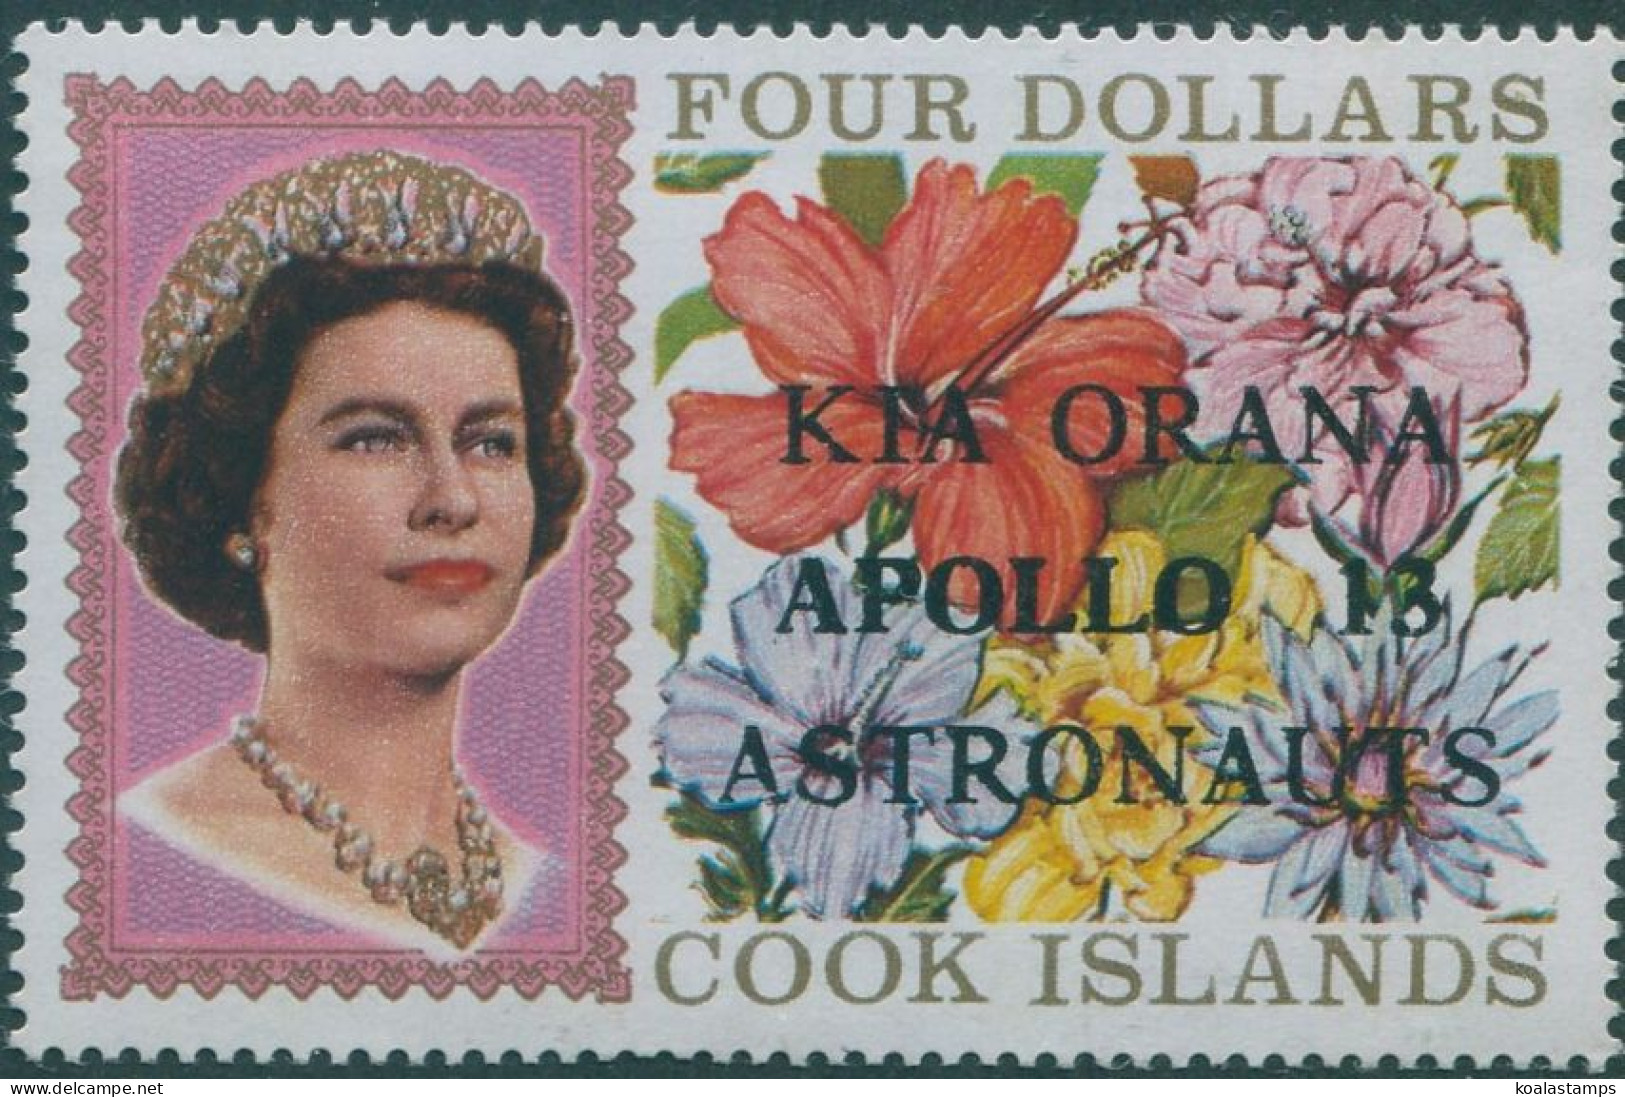 Cook Islands 1970 SG327 $4 QEII Flowers KIA ORANA APOLLO 13 ASTRONAUTS Ovpt MLH - Cook